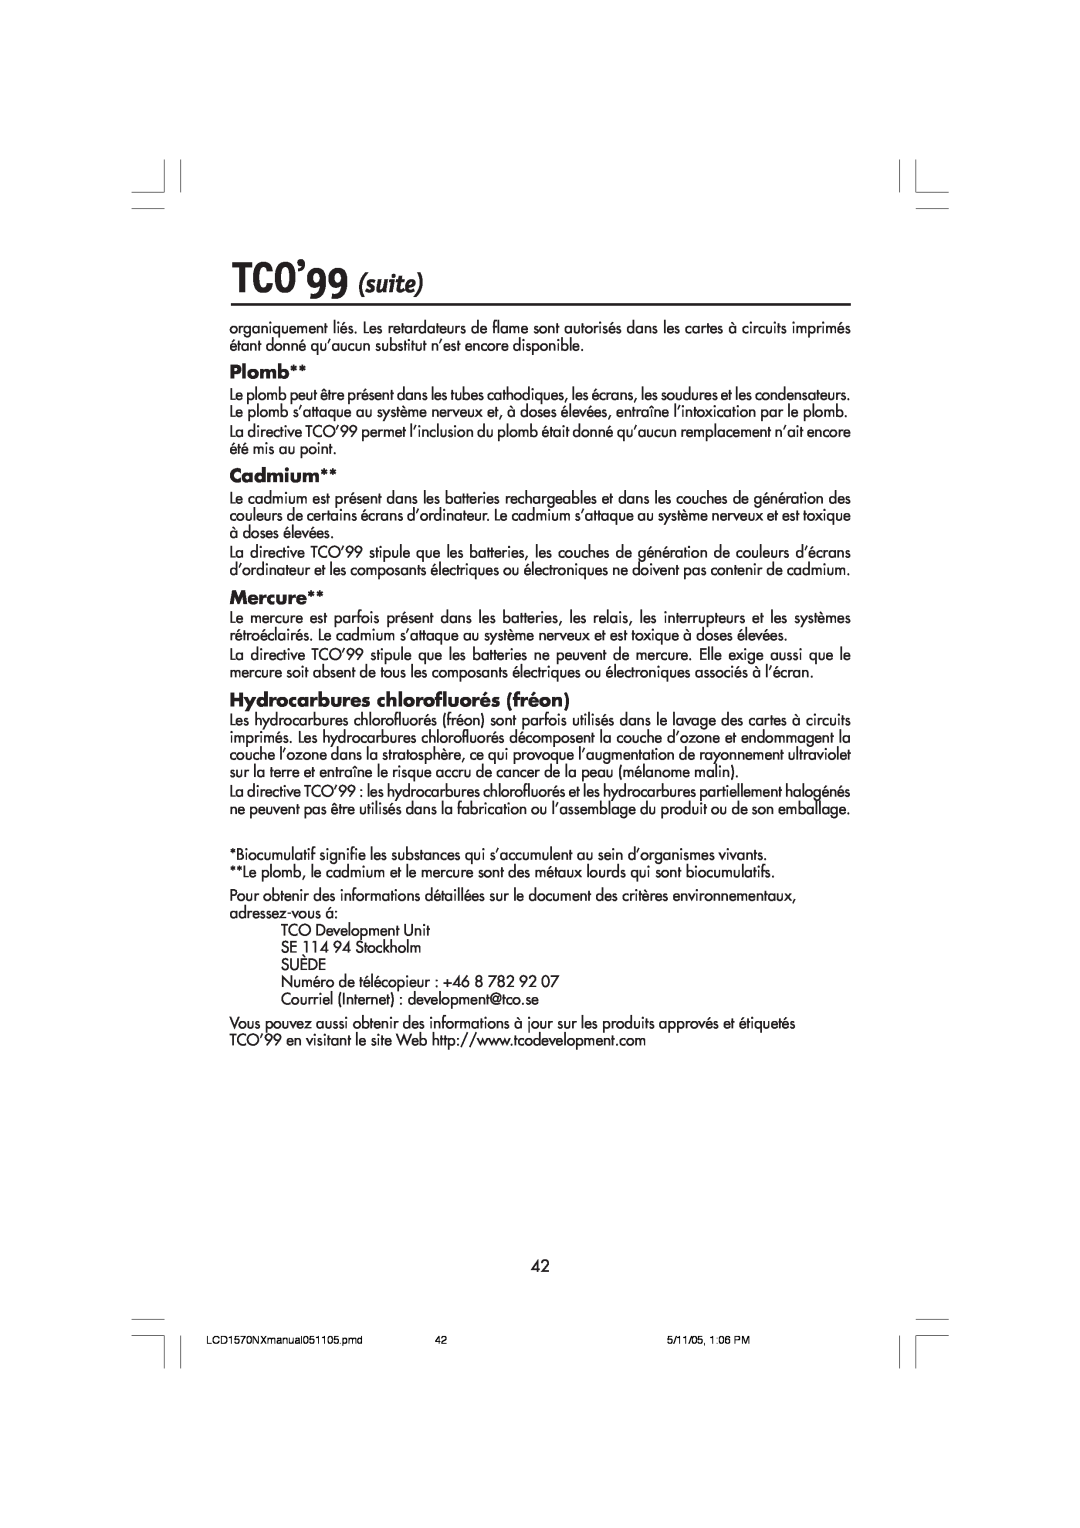 NEC LCD1570NX user manual TCO’99 suite, Plomb, Cadmium, Mercure, Hydrocarbures chlorofluorés fréon 